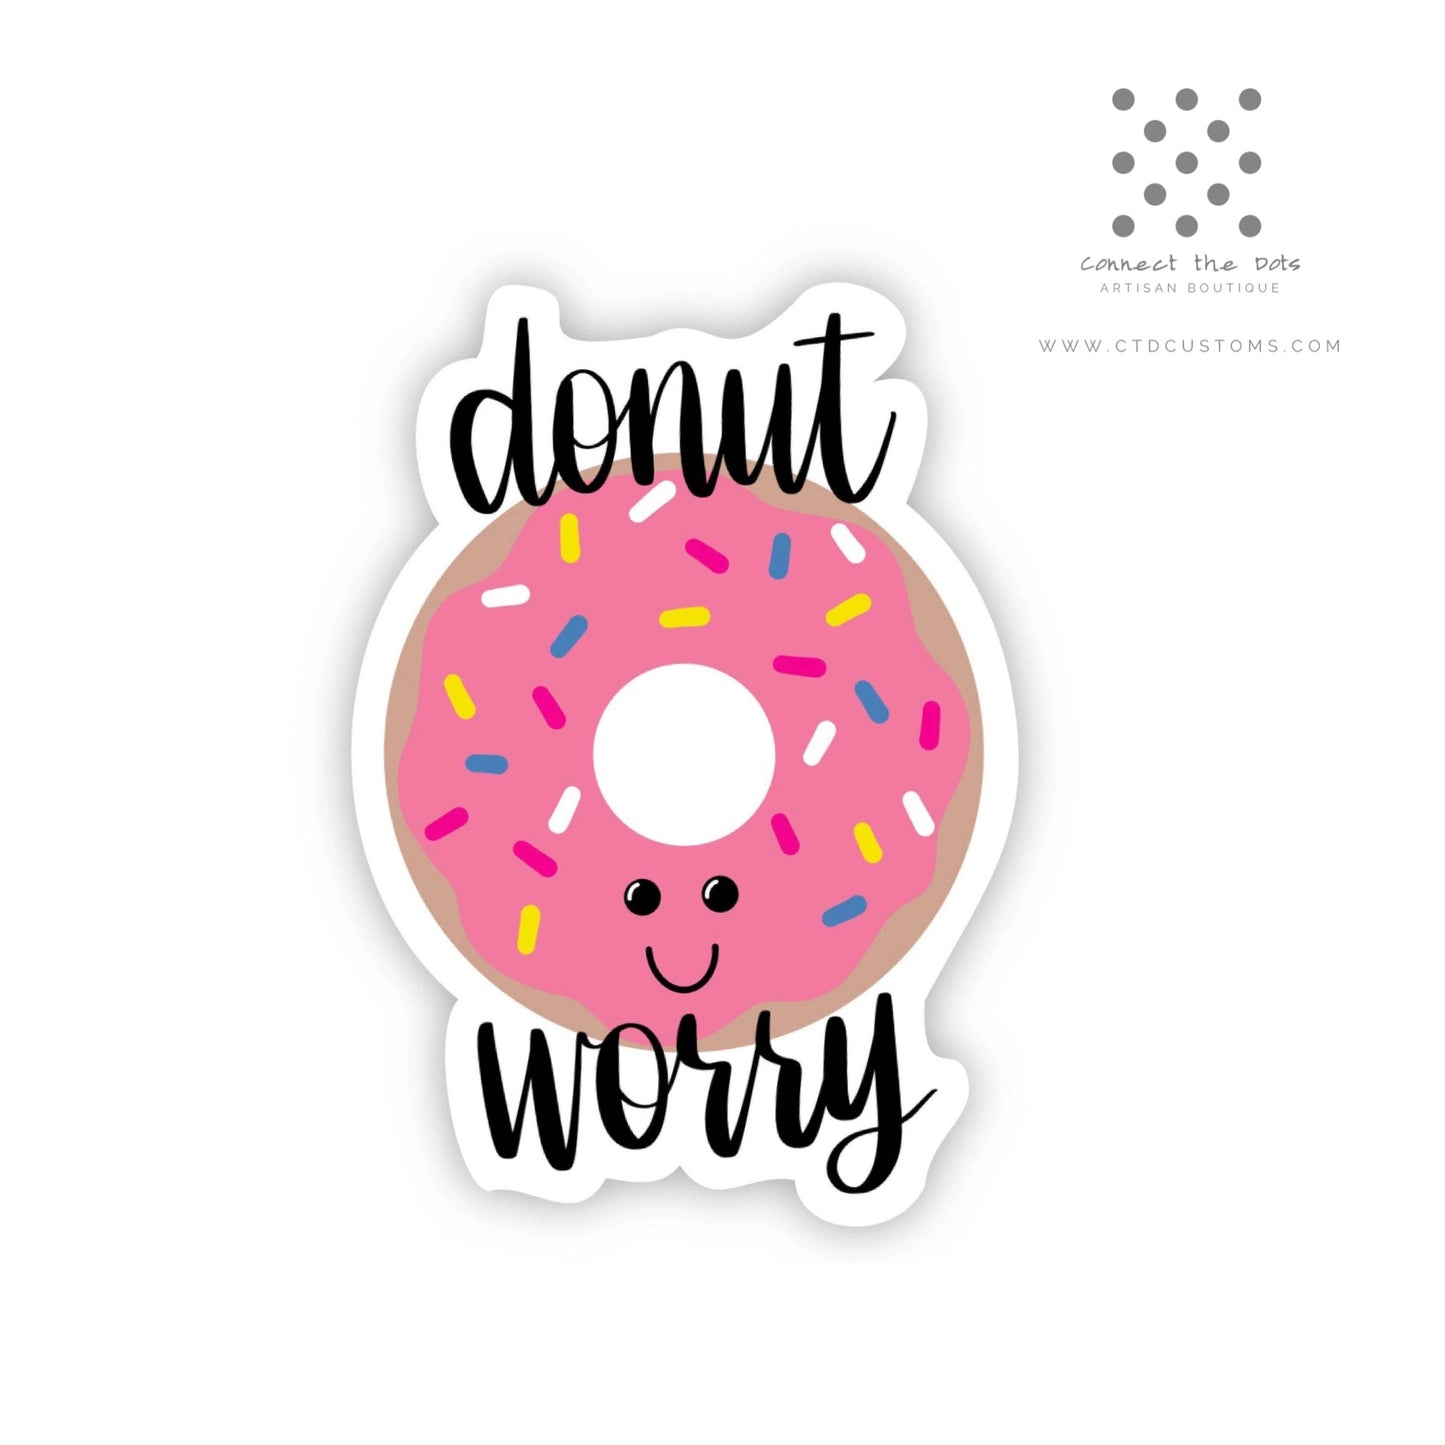 Donut Worry Vinyl Sticker